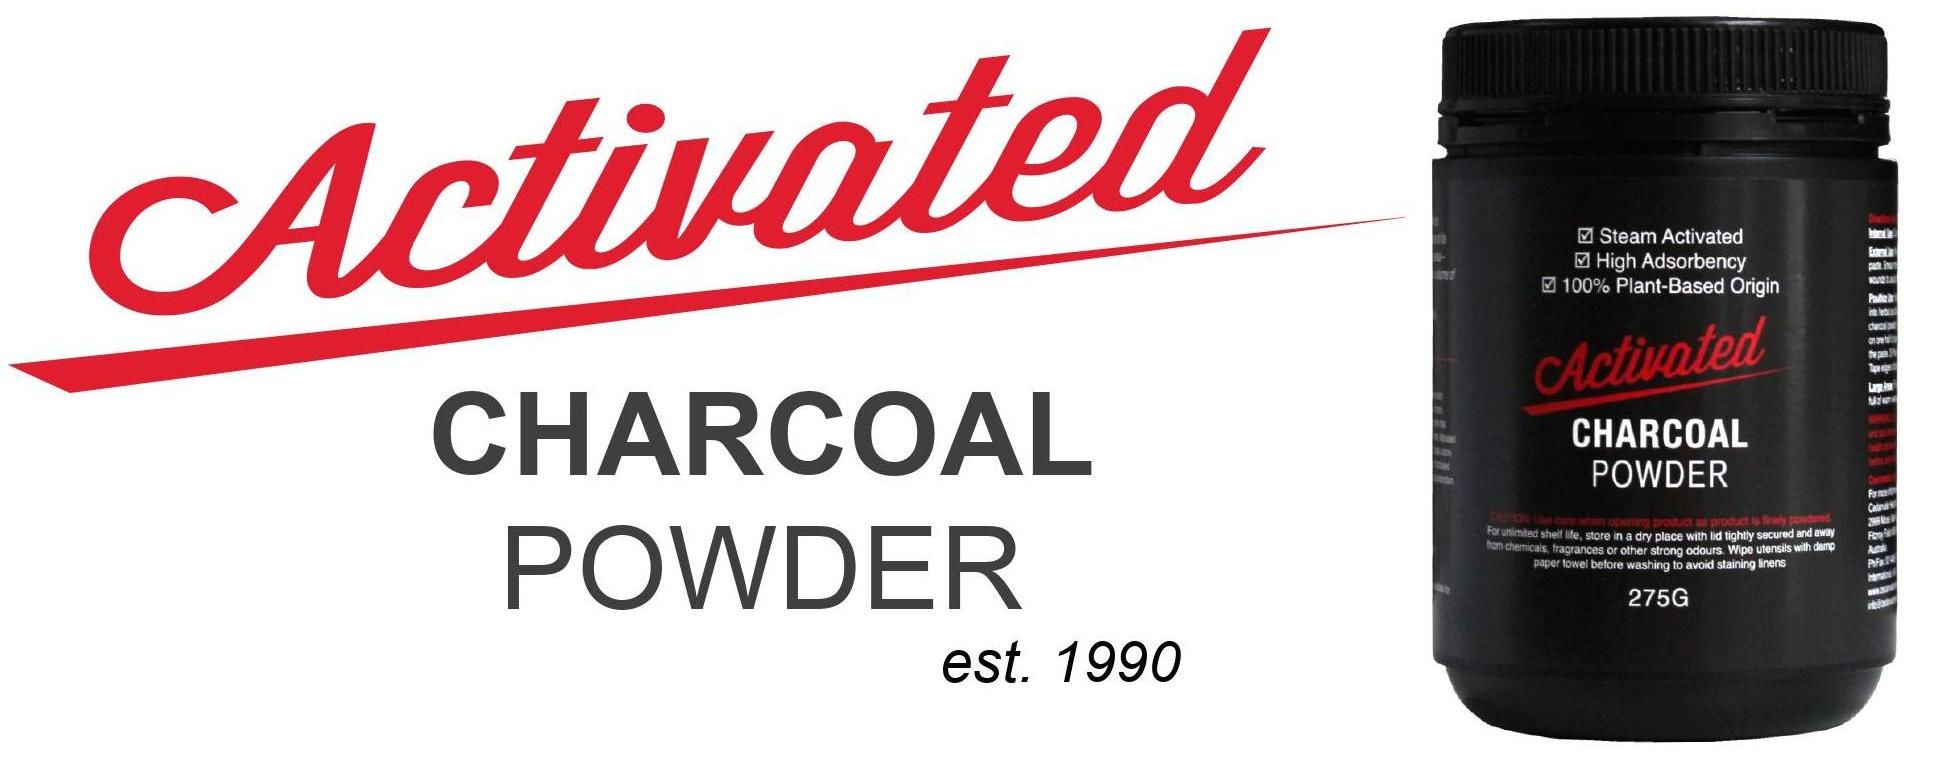 Activated Charcoal Powder, est. 1990